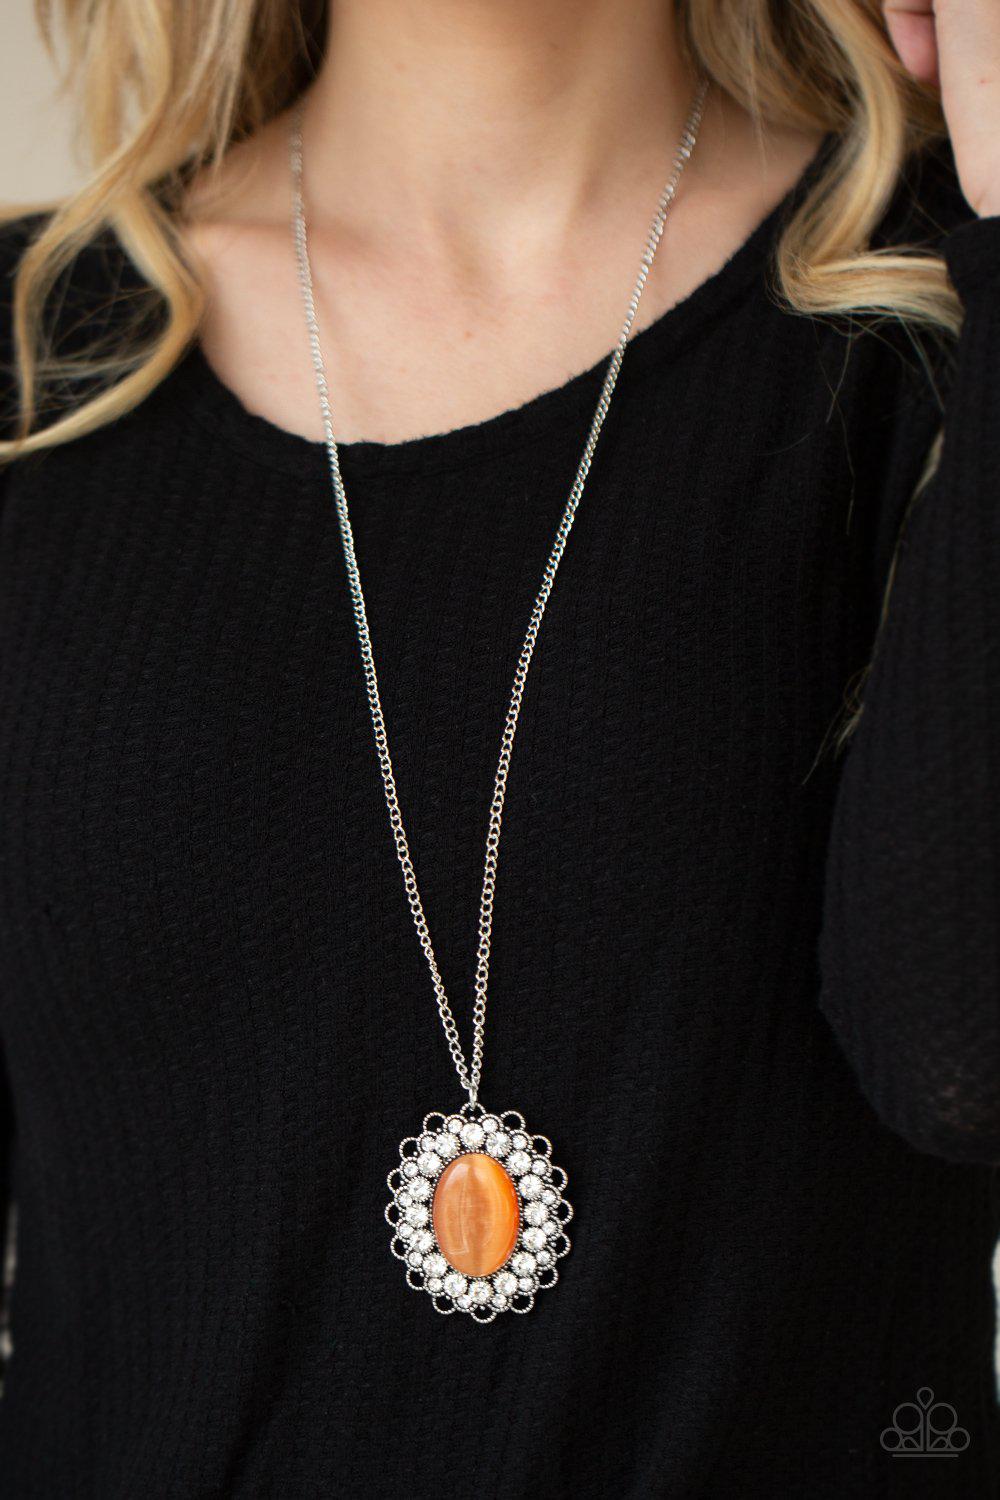 Oh My Medallion Orange Cat's Eye Stone Necklace - Paparazzi Accessories- lightbox - CarasShop.com - $5 Jewelry by Cara Jewels